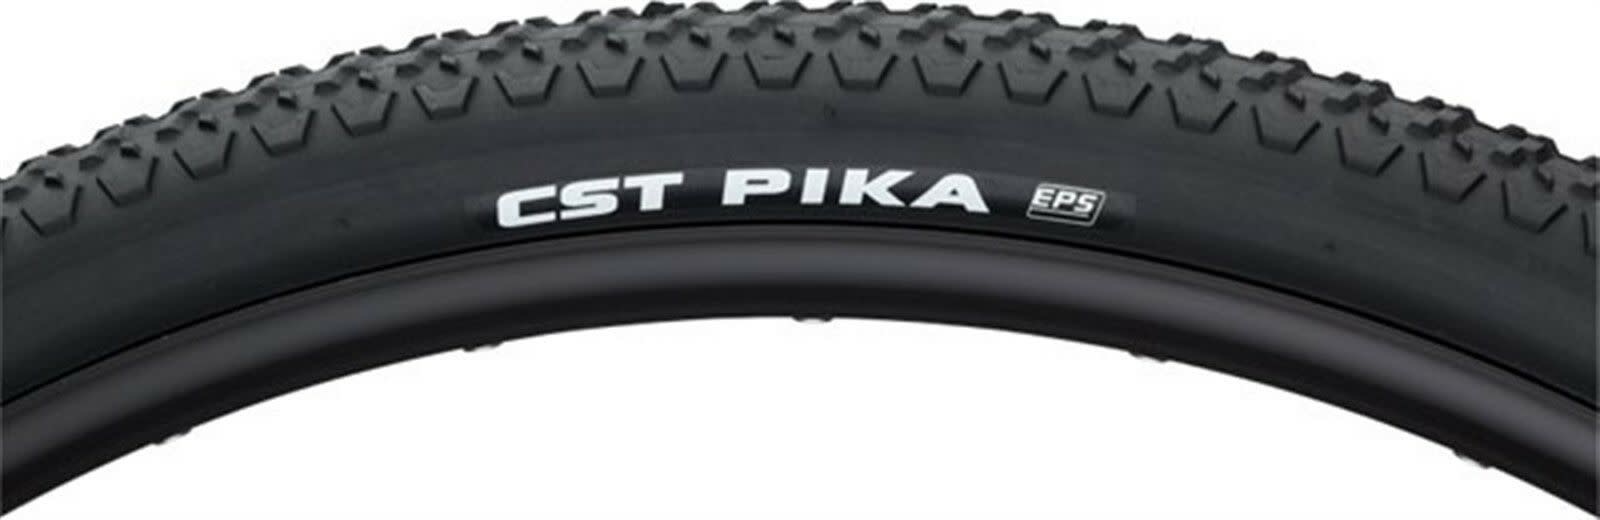 CST Pika Dual Compound Tire Wire Bead C1894 700c Black Wall 700 x 42 Bike 